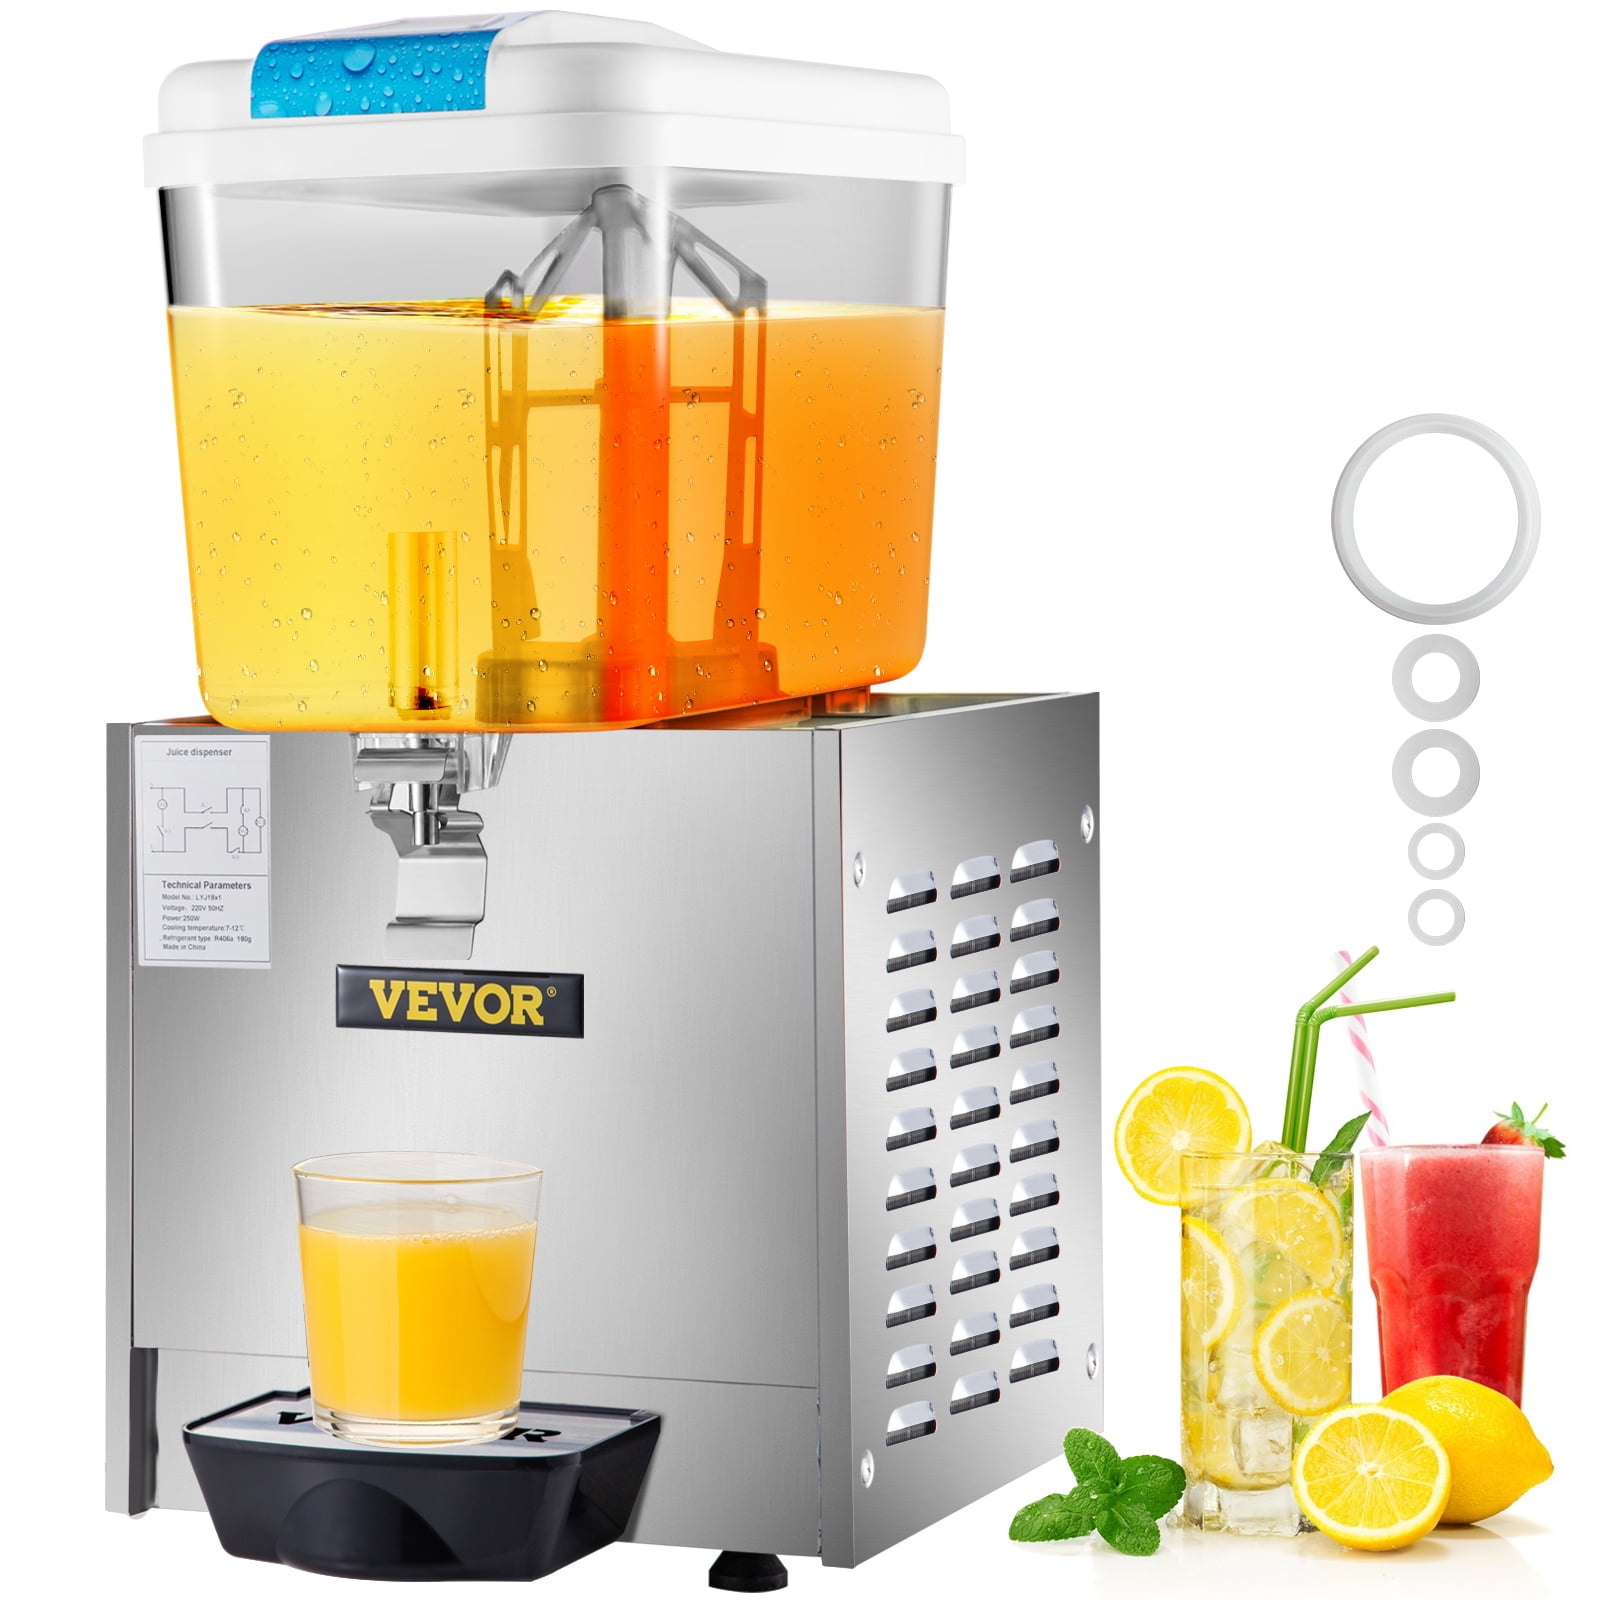 VEVOR Commercial Beverage Dispenser 6.4 Gallon 24L 2 Tanks,Ice Tea Drink Machine 12 Liter per Tank 150W,Stainless Steel Food Grade Material 110V,Fruit